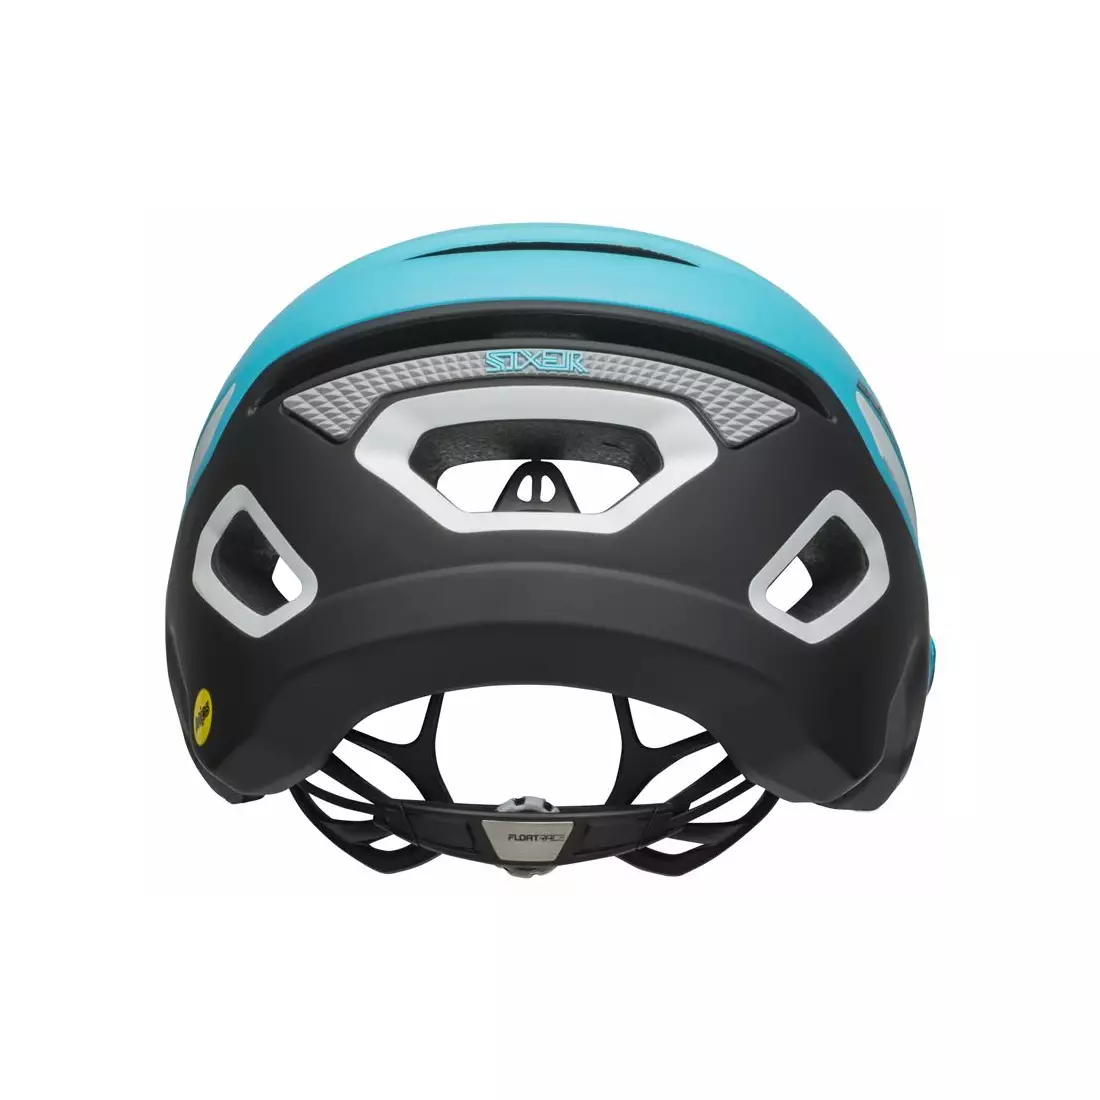 BELL cyklistická helma mtb SIXER INTEGRATED MIPS, rigeline matte blue black 